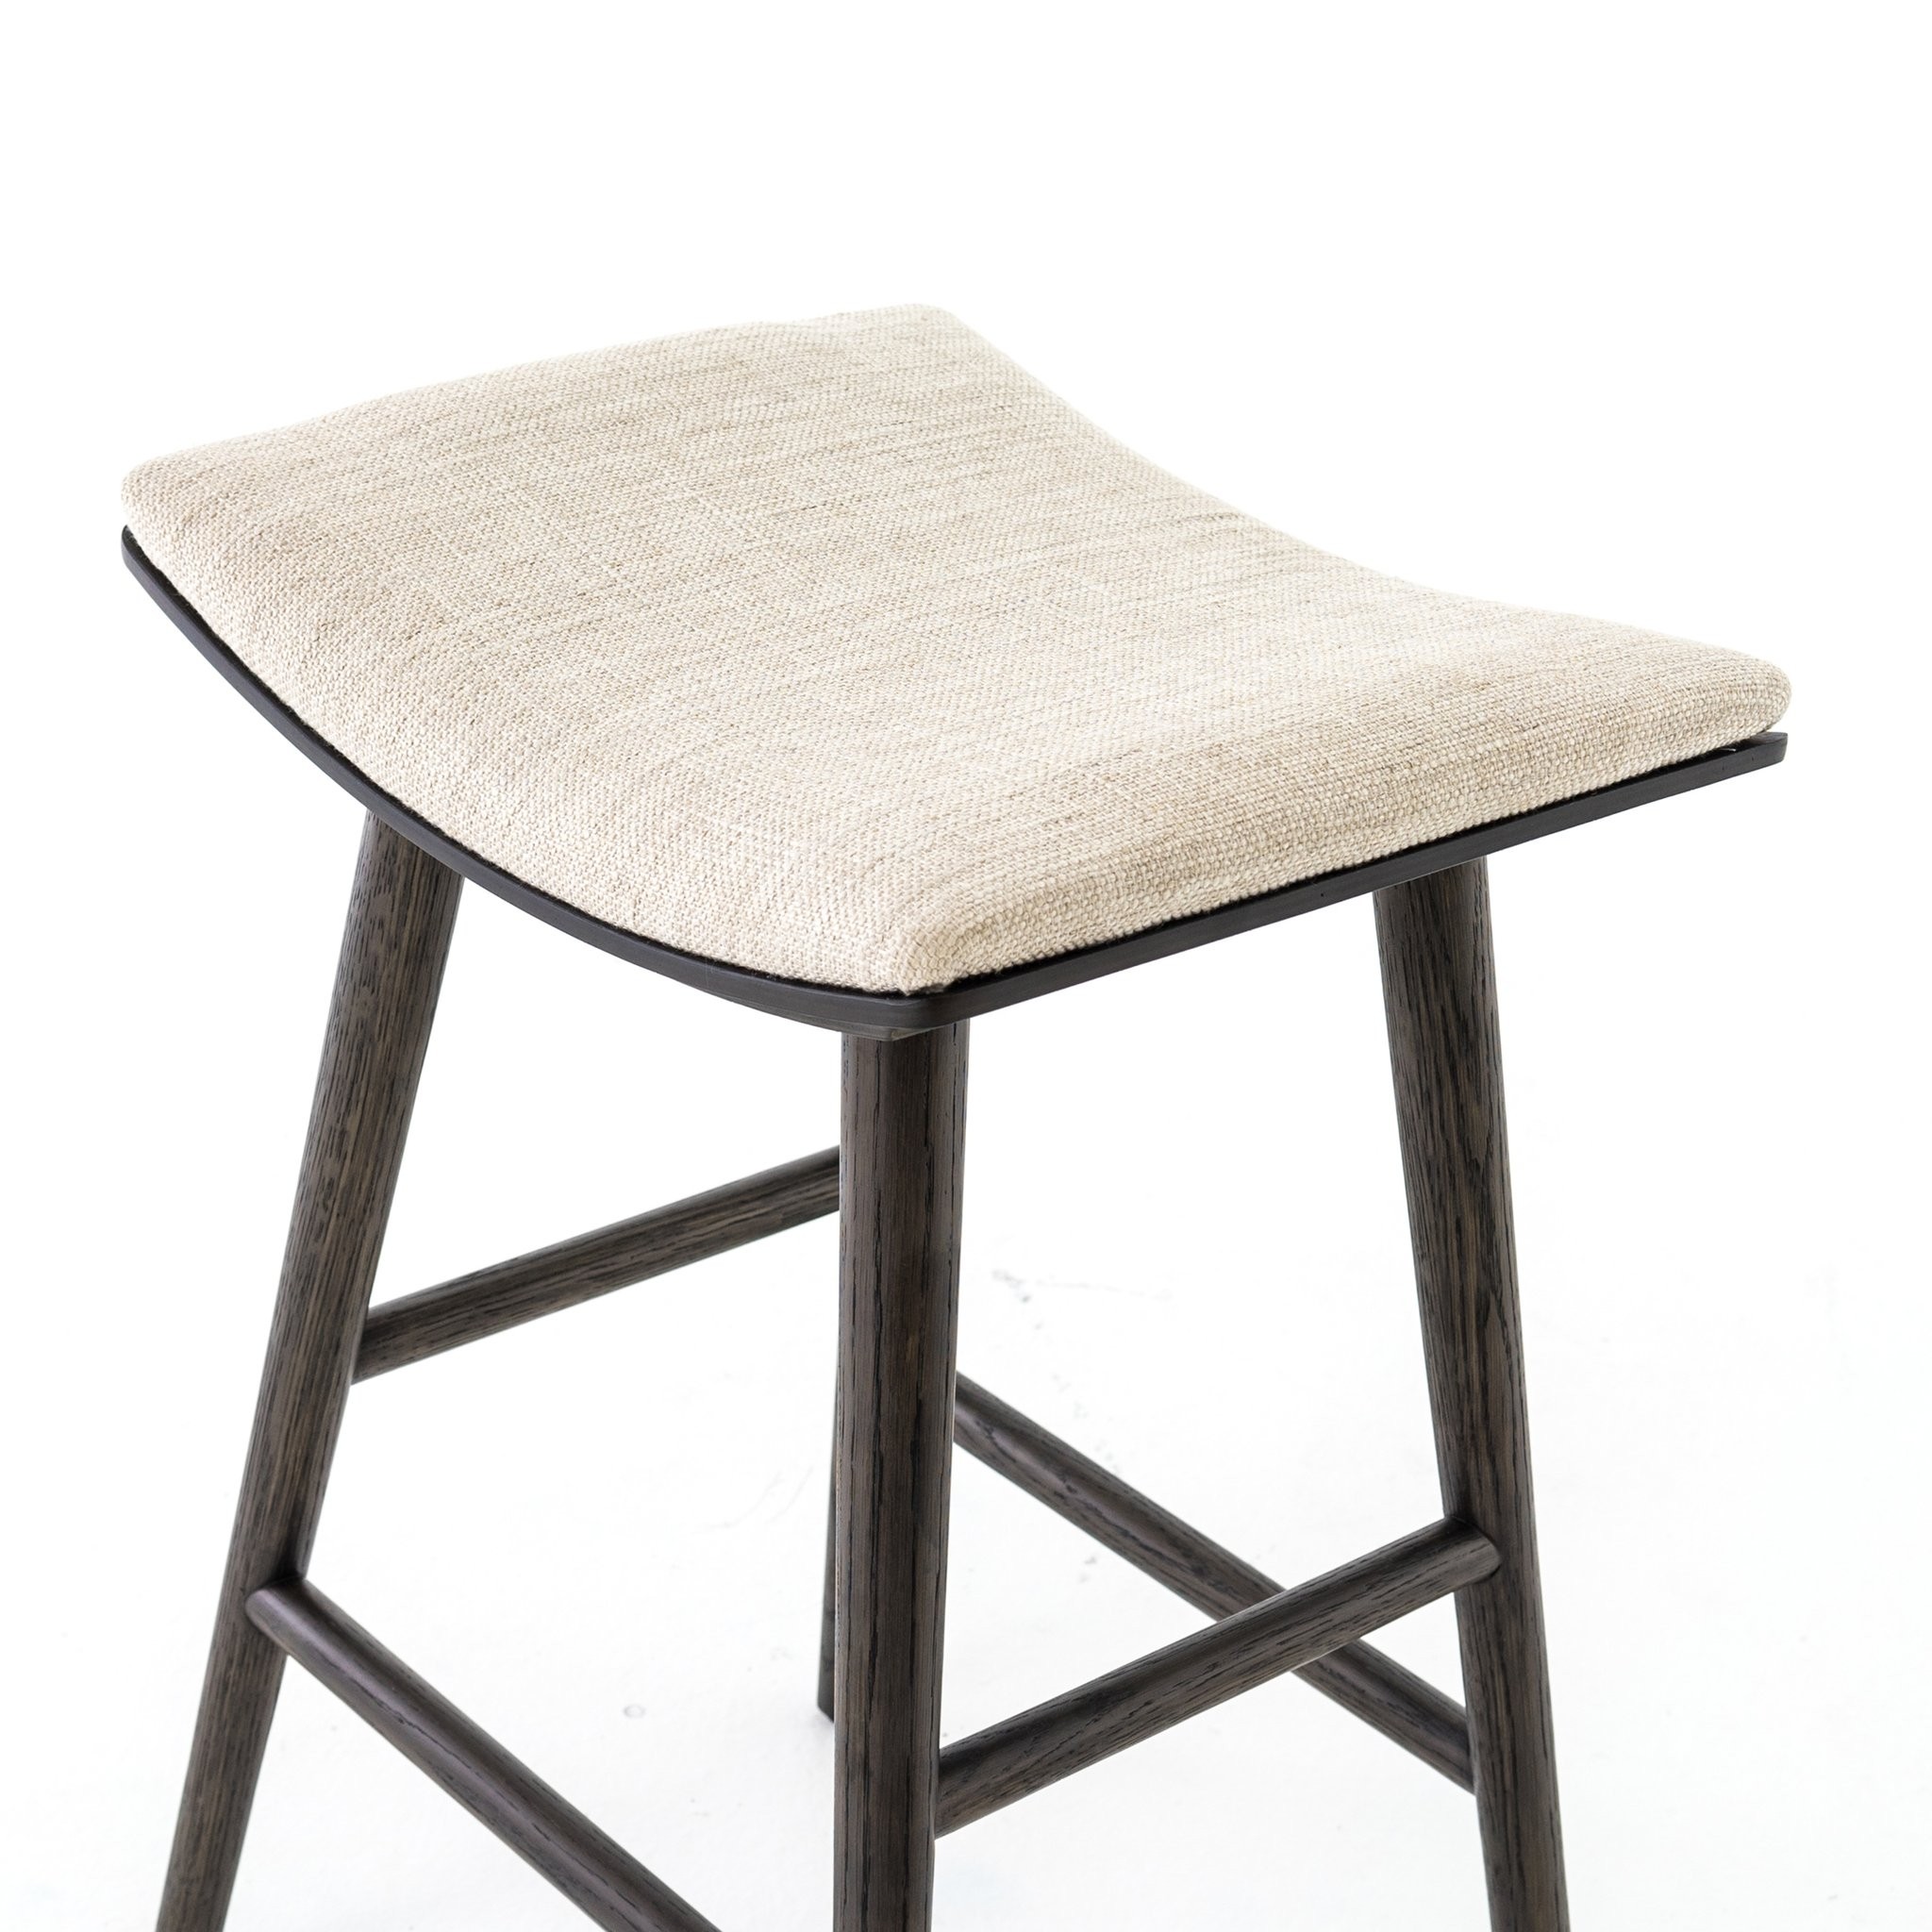 Saddle style seat counter height barstool set of 4 stools